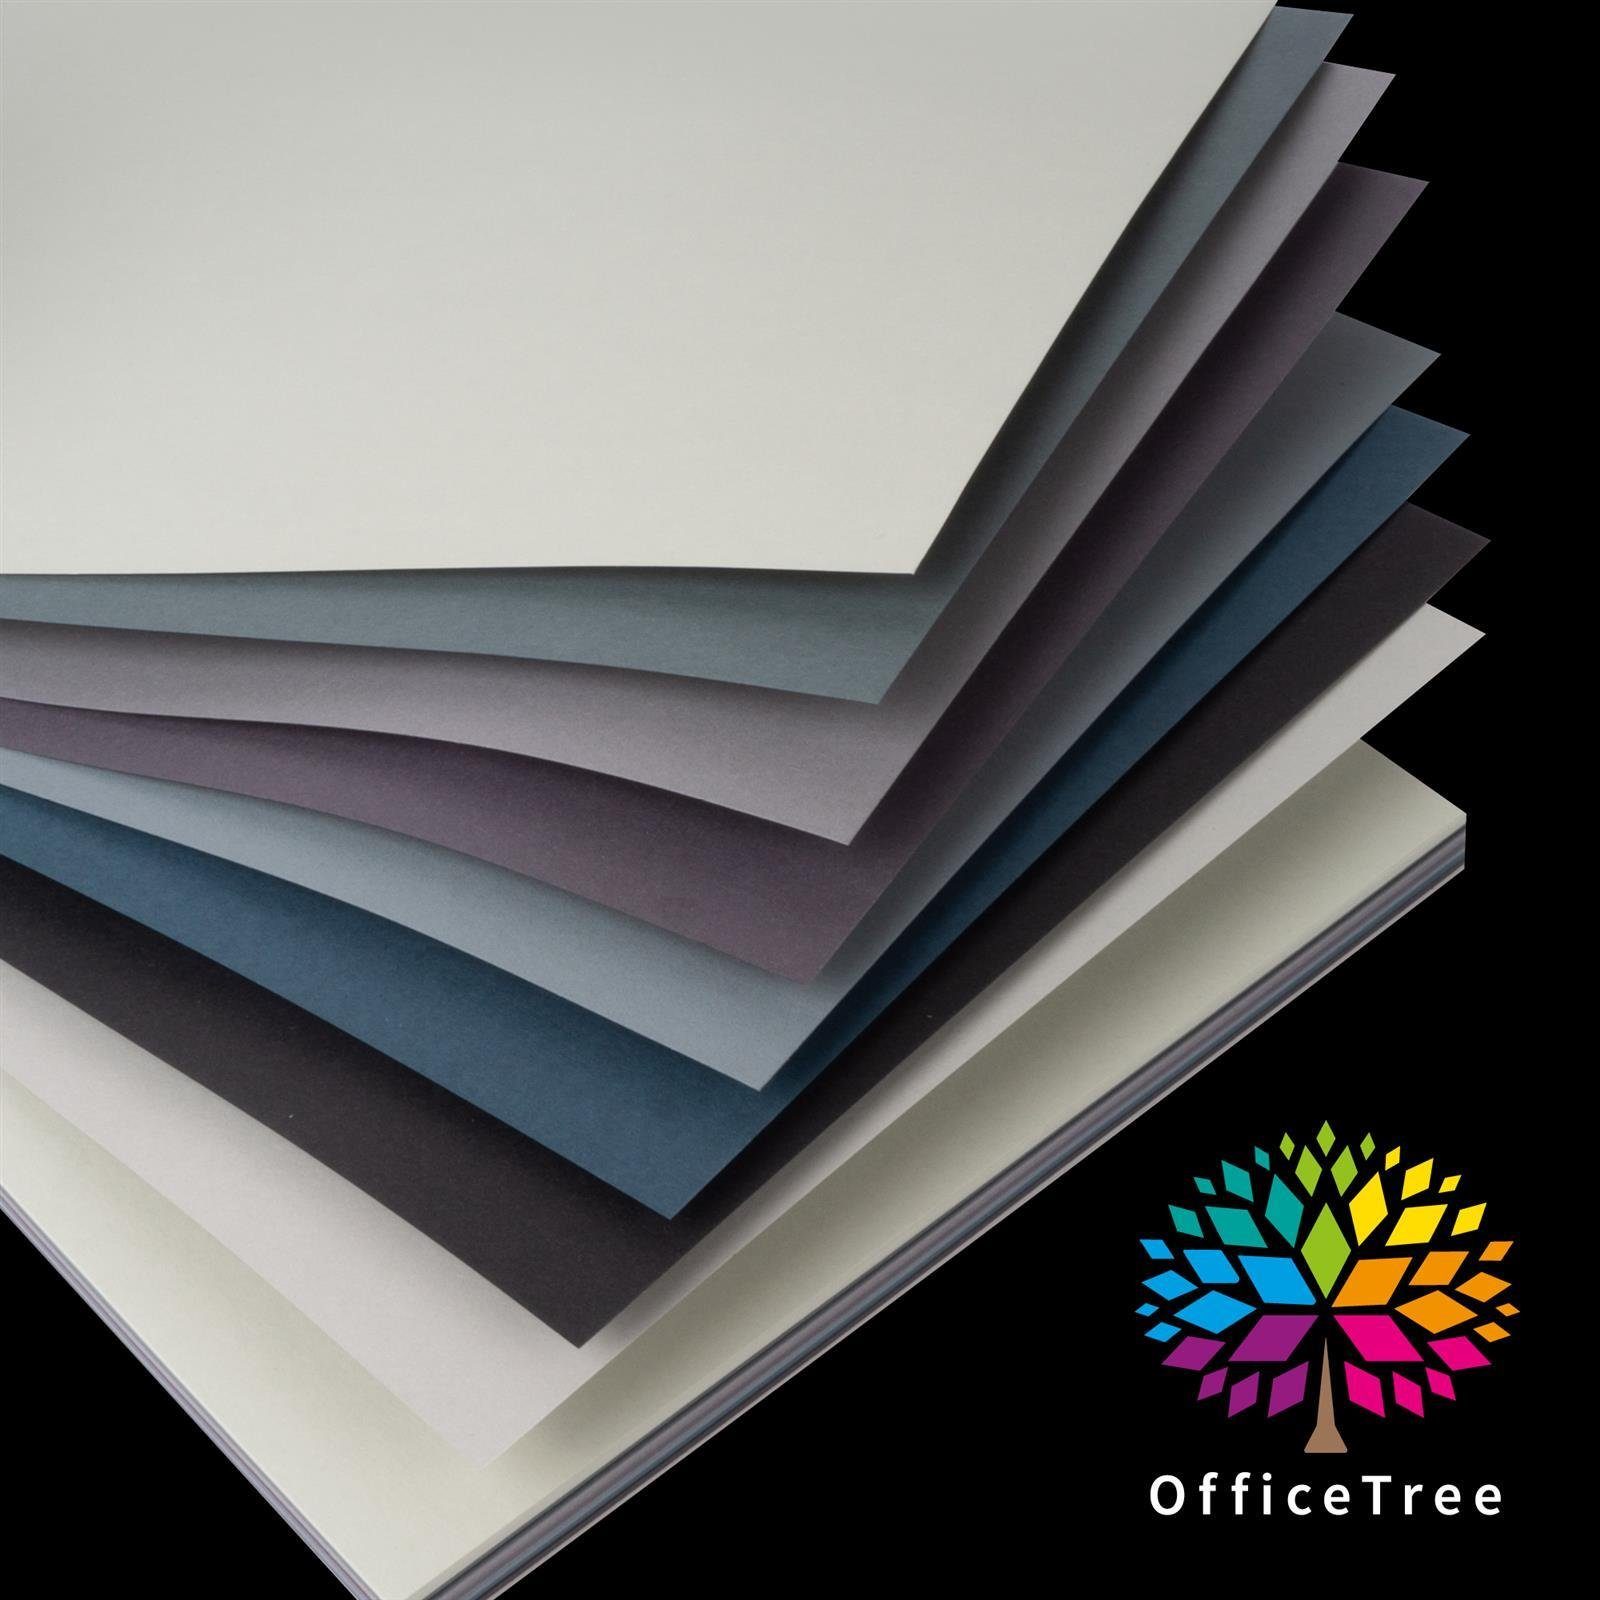 OfficeTree Transparentpapier Bastelset Grau Blatt Kinder 80 130g/m - Tonpap, - zum Bastelpapier Tonpapier Basteln Gestalten A4 und Töne OfficeTree